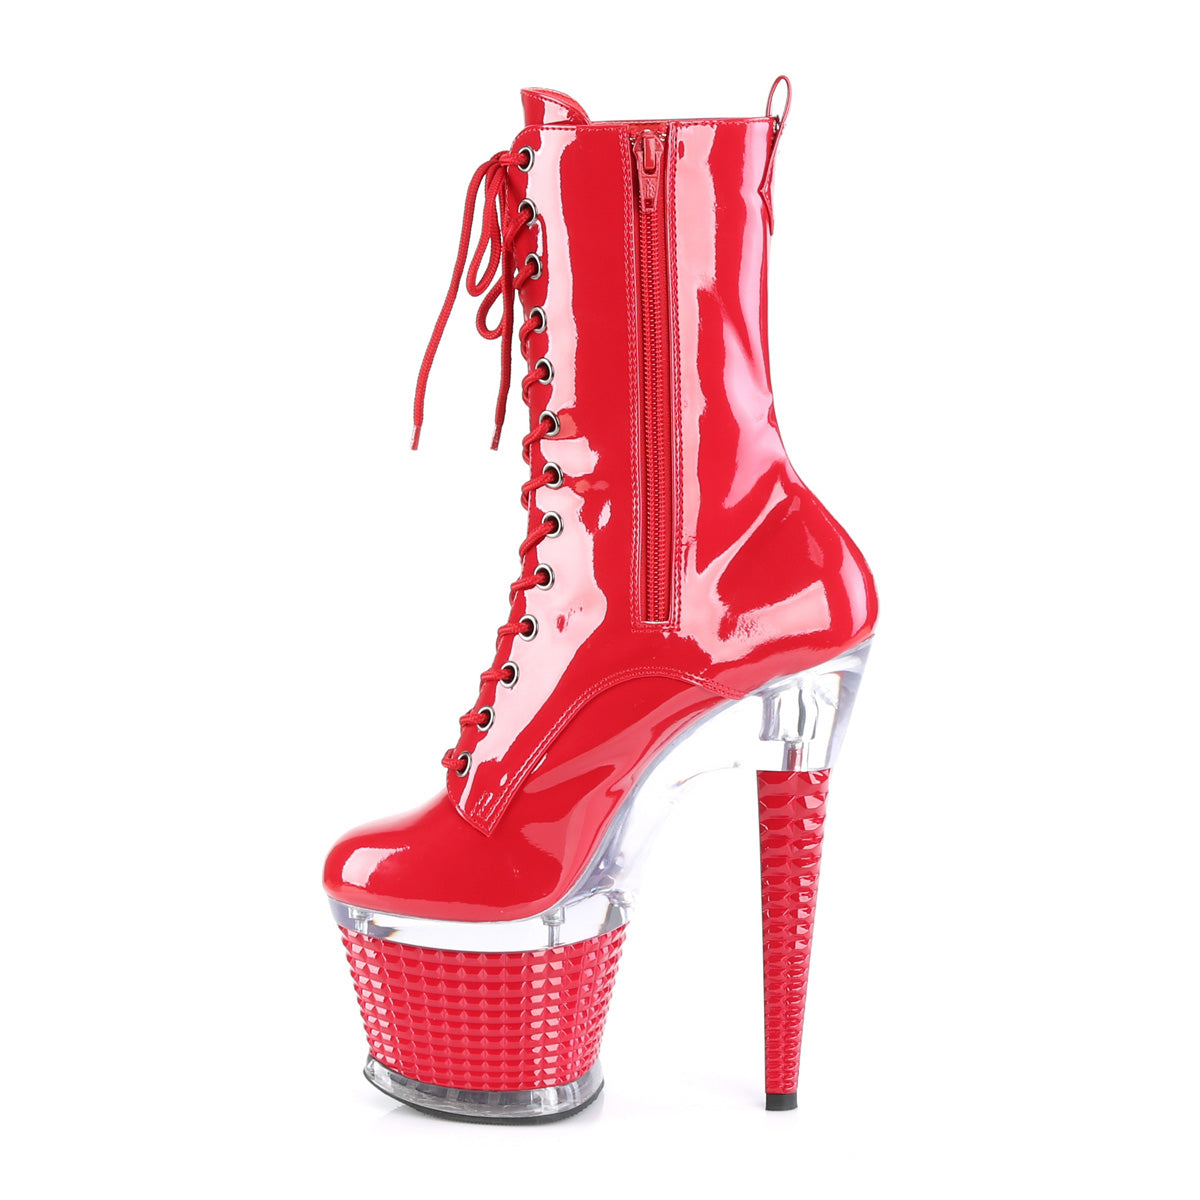 Red Pole Dancer Boots - Pleaser Spectator-1040